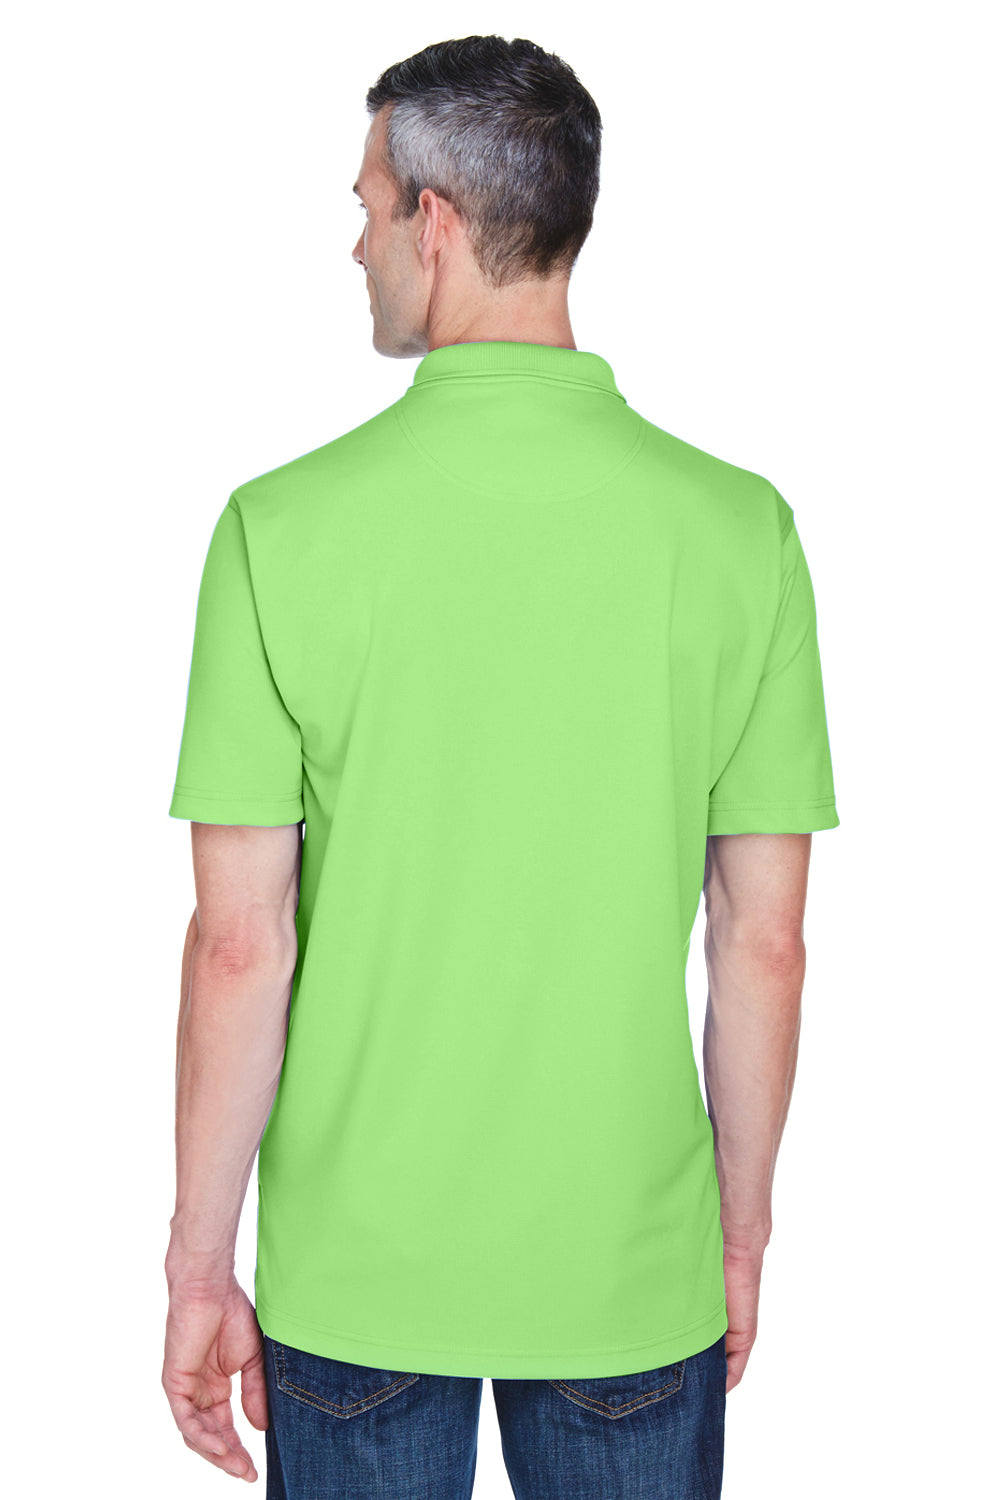 UltraClub 8445 Mens Cool & Dry Performance Moisture Wicking Short Sleeve Polo Shirt Light Green Back